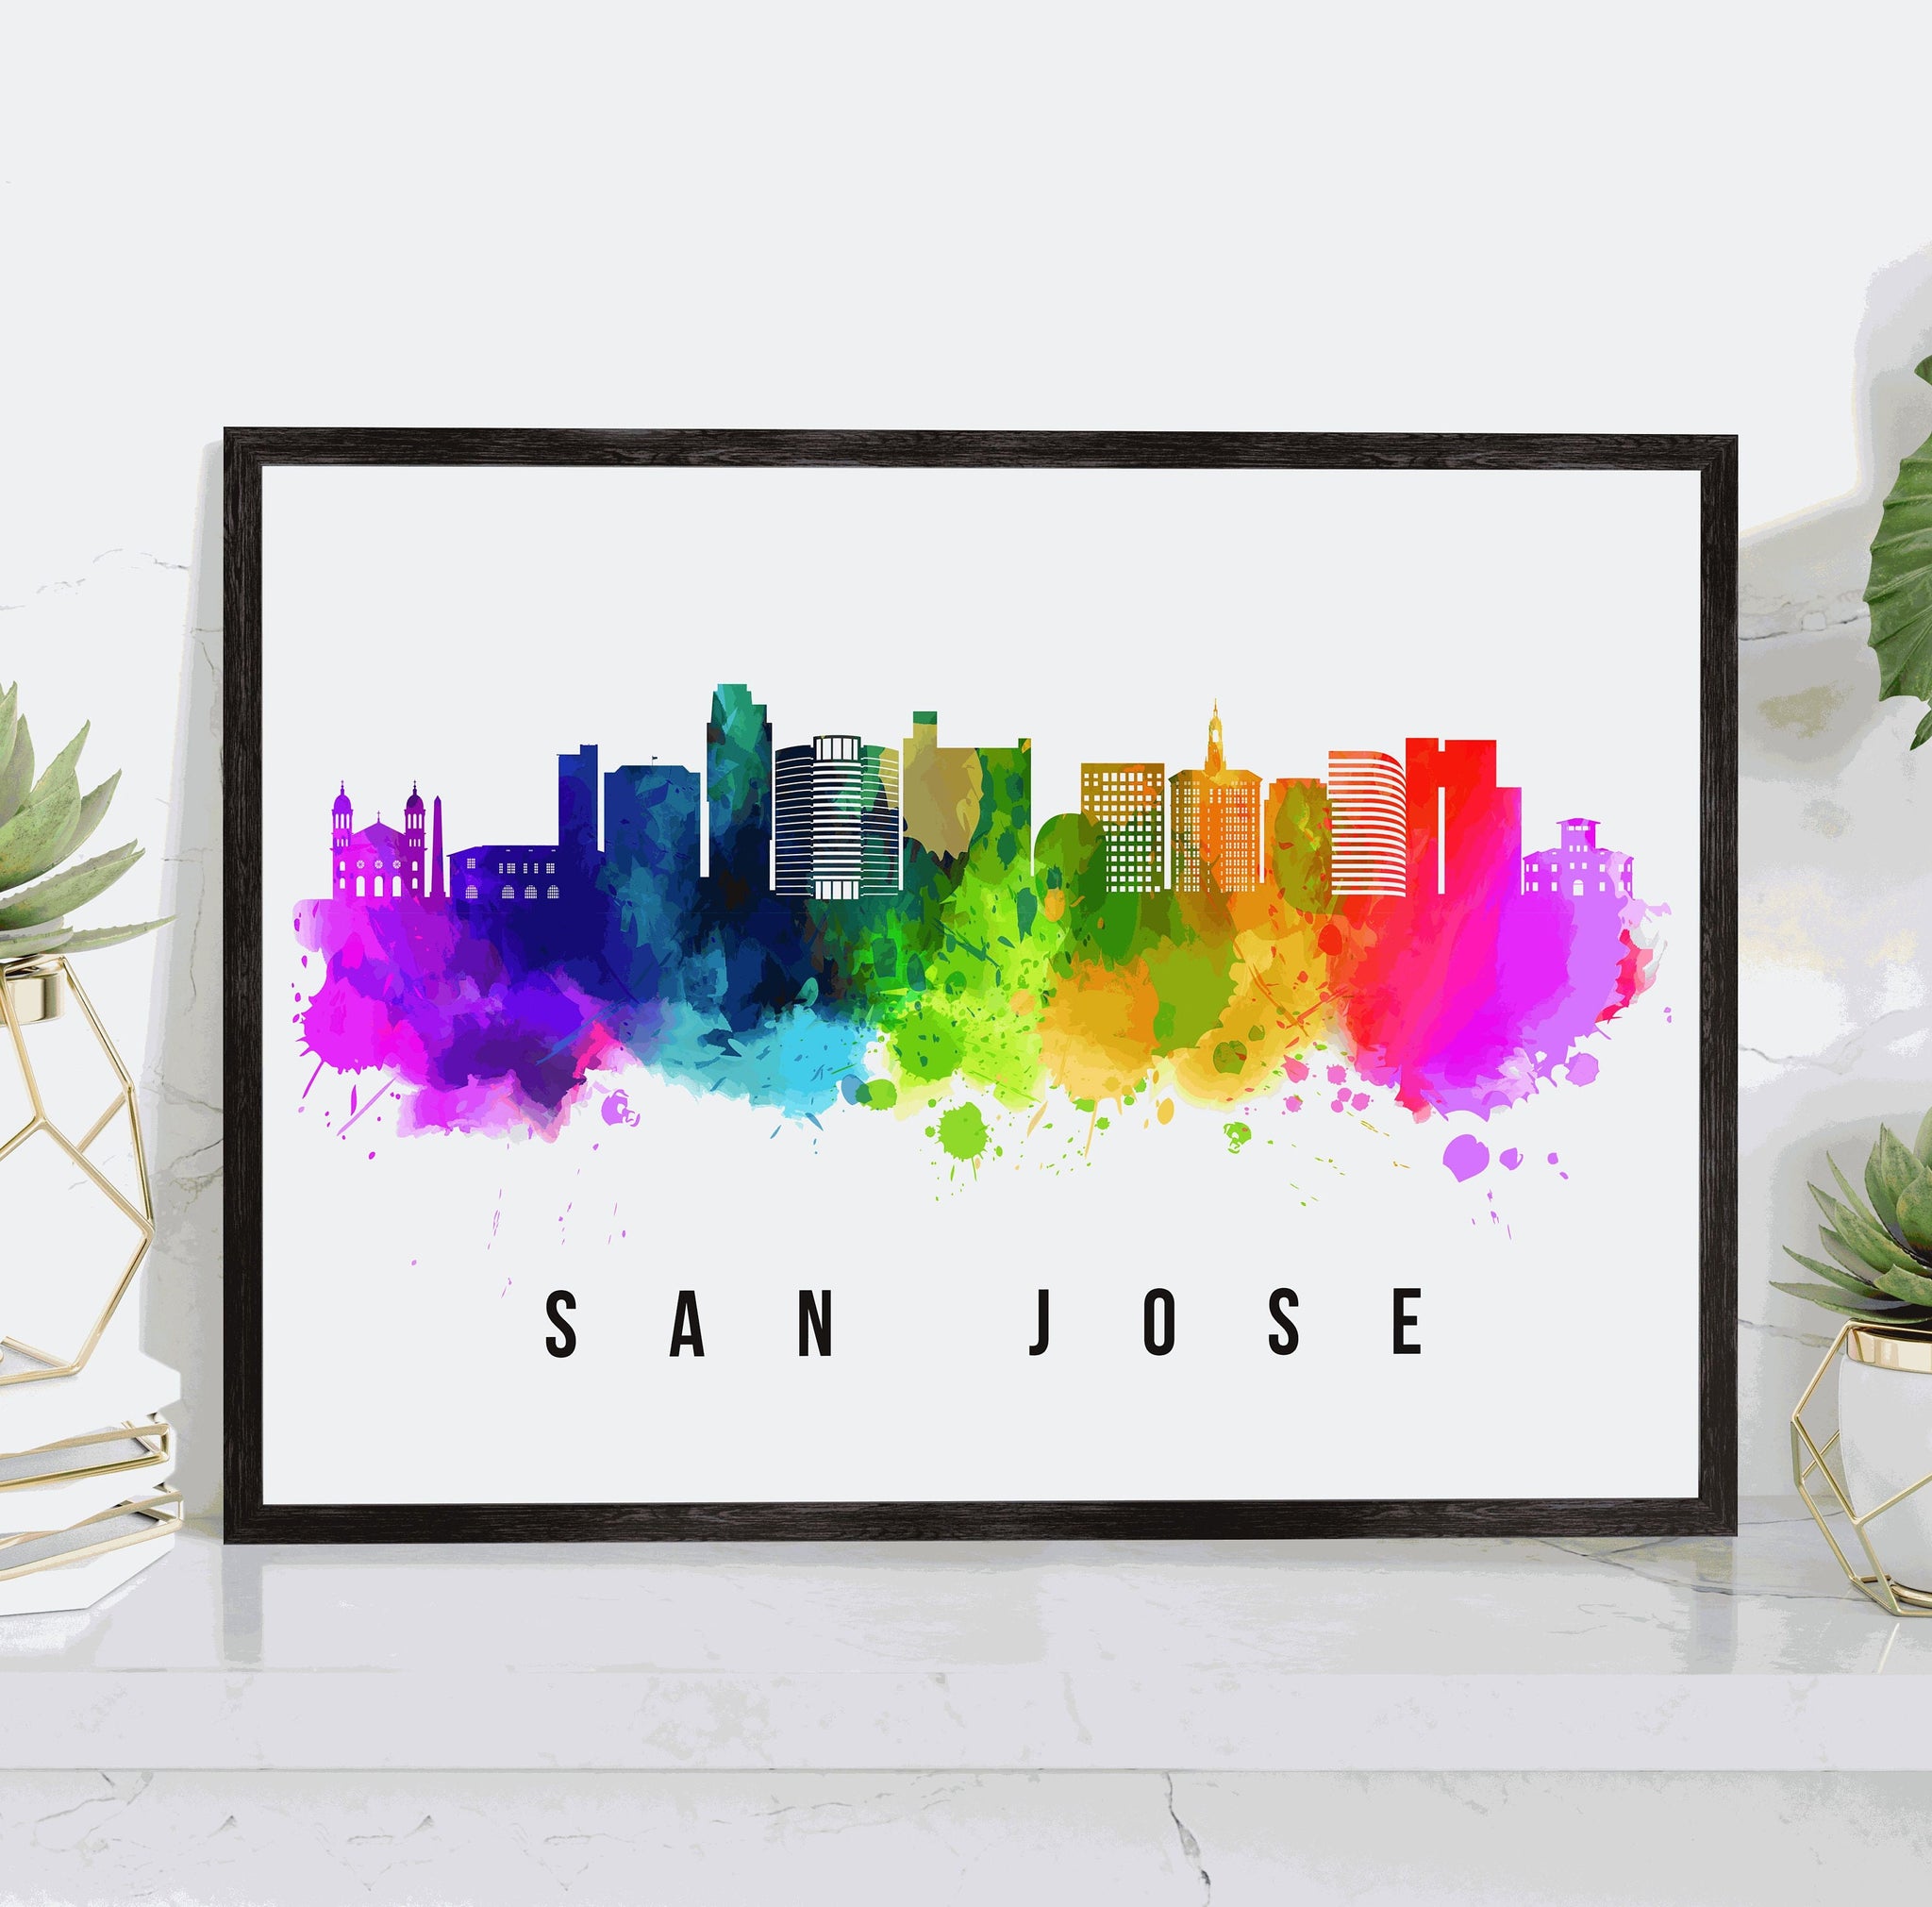 San Jose Skyline California Poster, California Cityscape Painting, San jose California Poster, Cityscape and Landmark Print, Home Wall Art